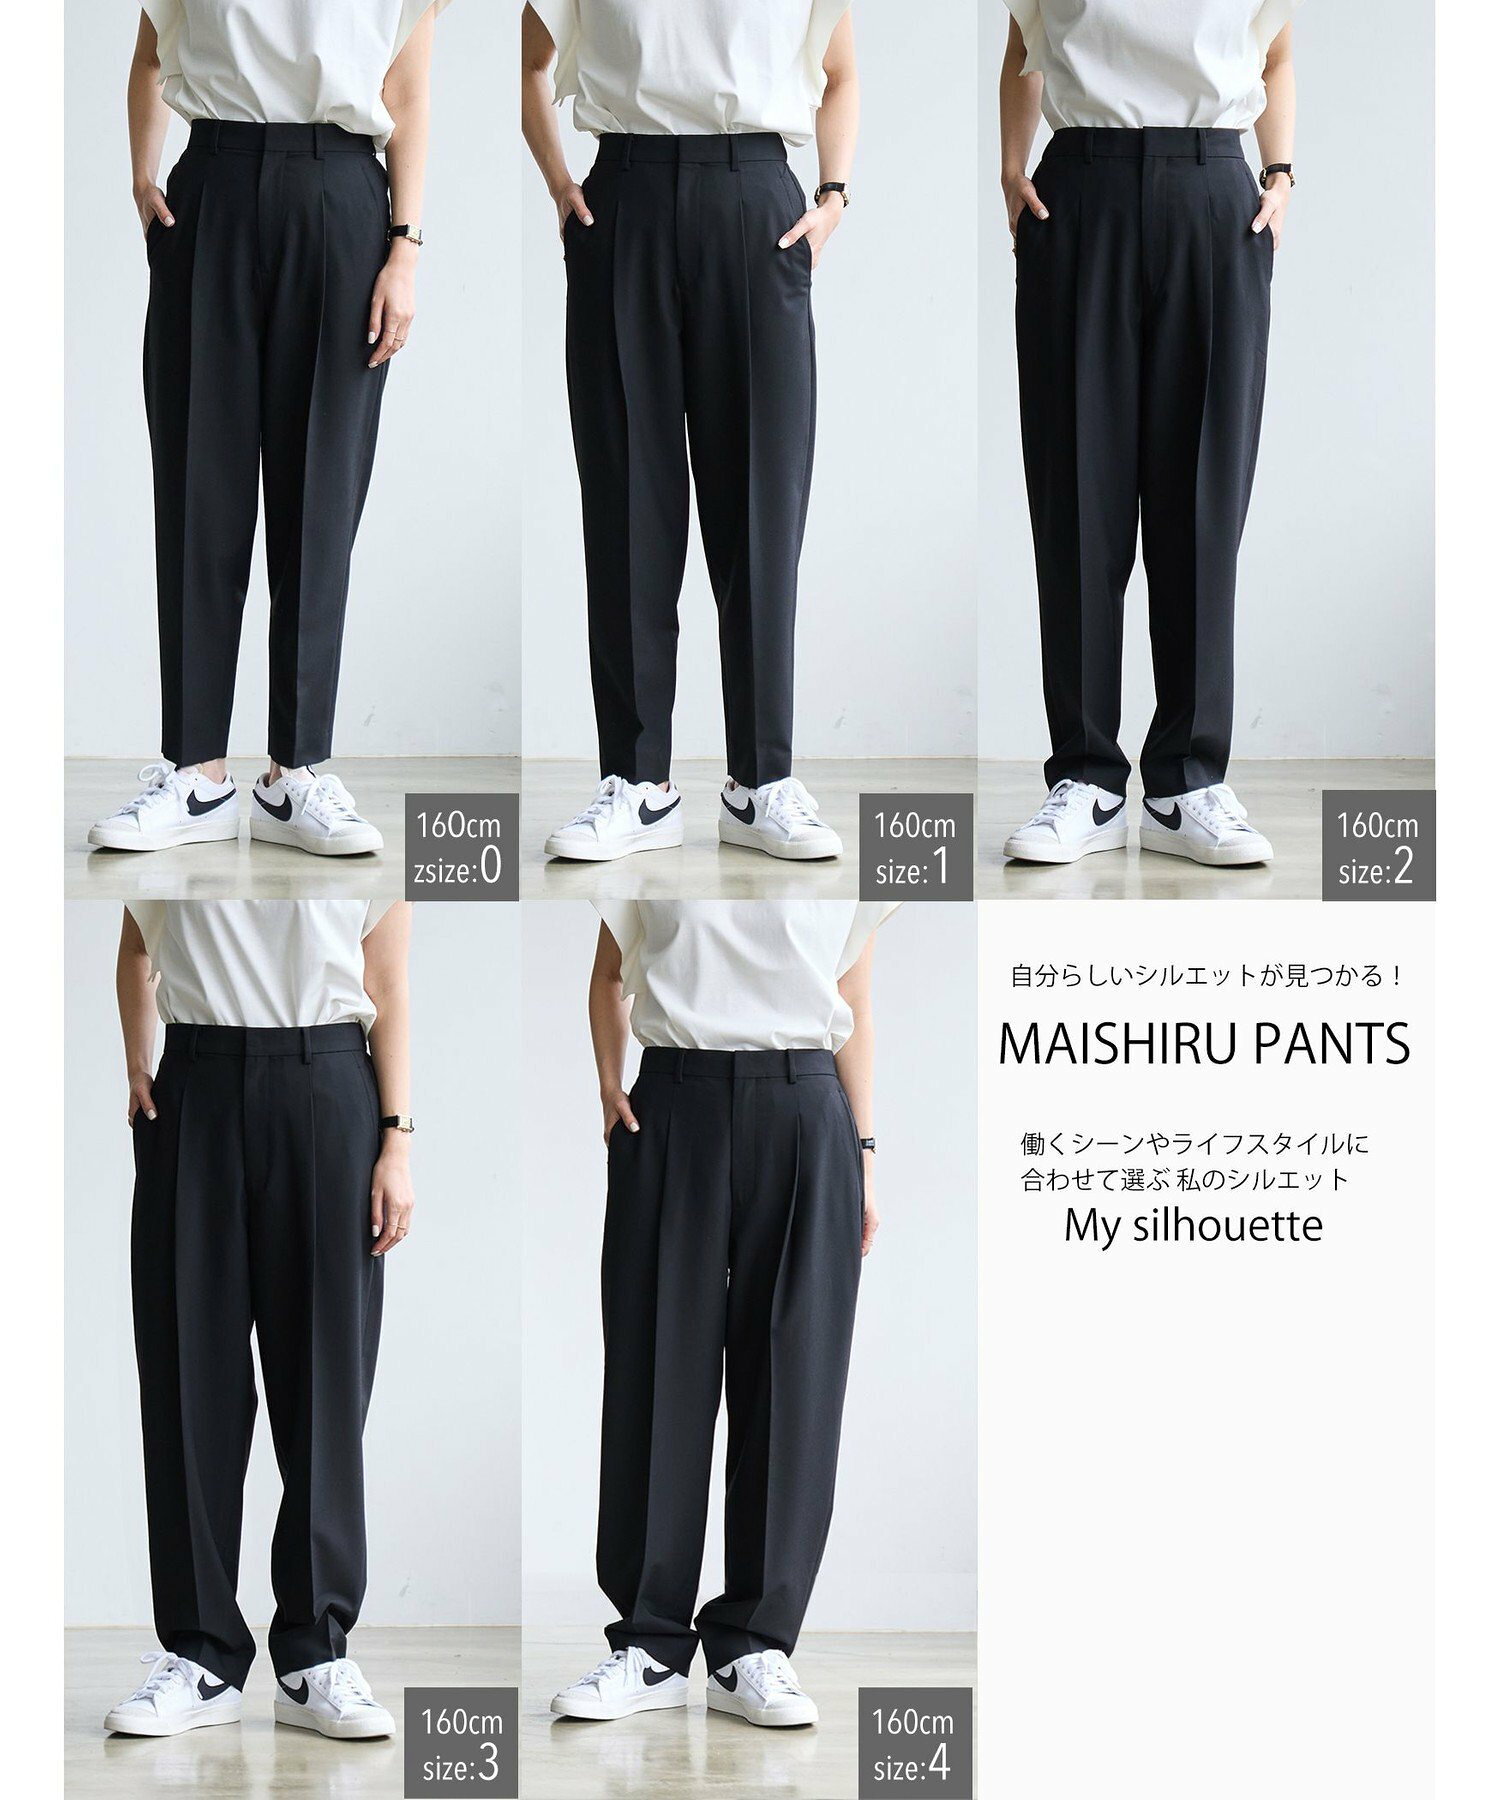 【RONEL】MAISHIRU PANTS(マイシル パンツ)